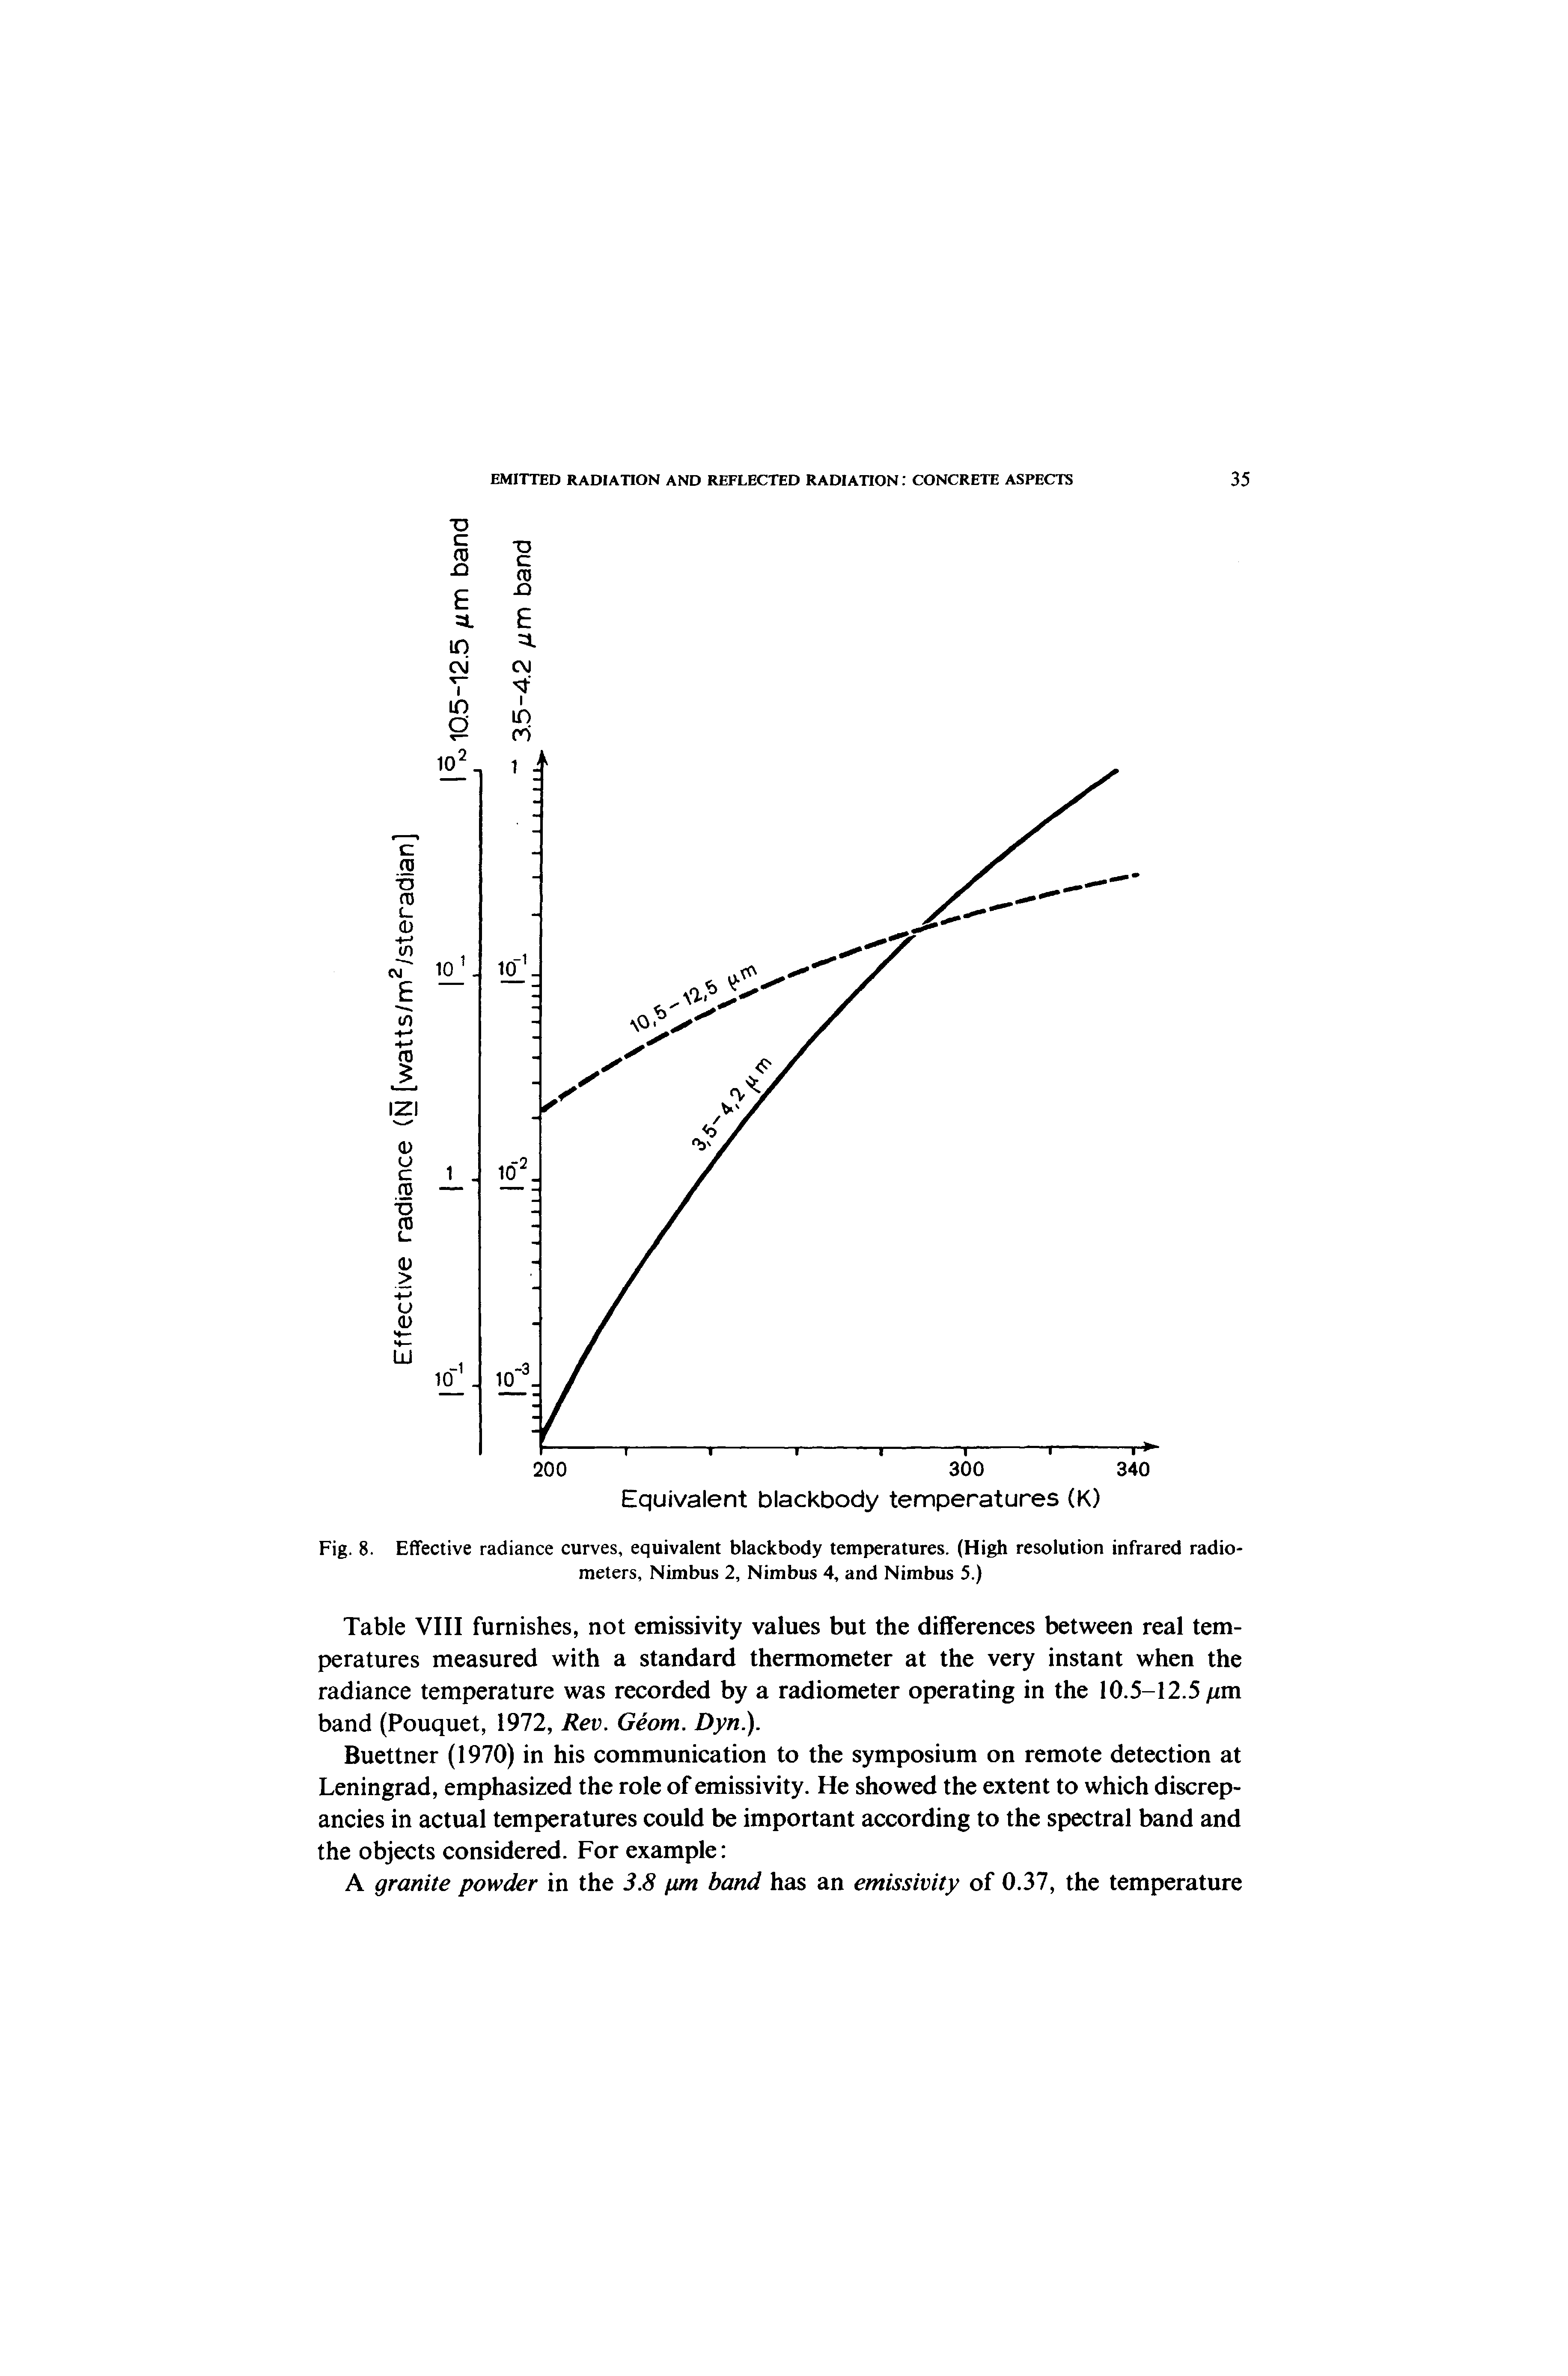 Fig. 8. Effective radiance curves, equivalent blackbody temperatures. (High resolution infrared radiometers, Nimbus 2, Nimbus 4, and Nimbus 5.)...